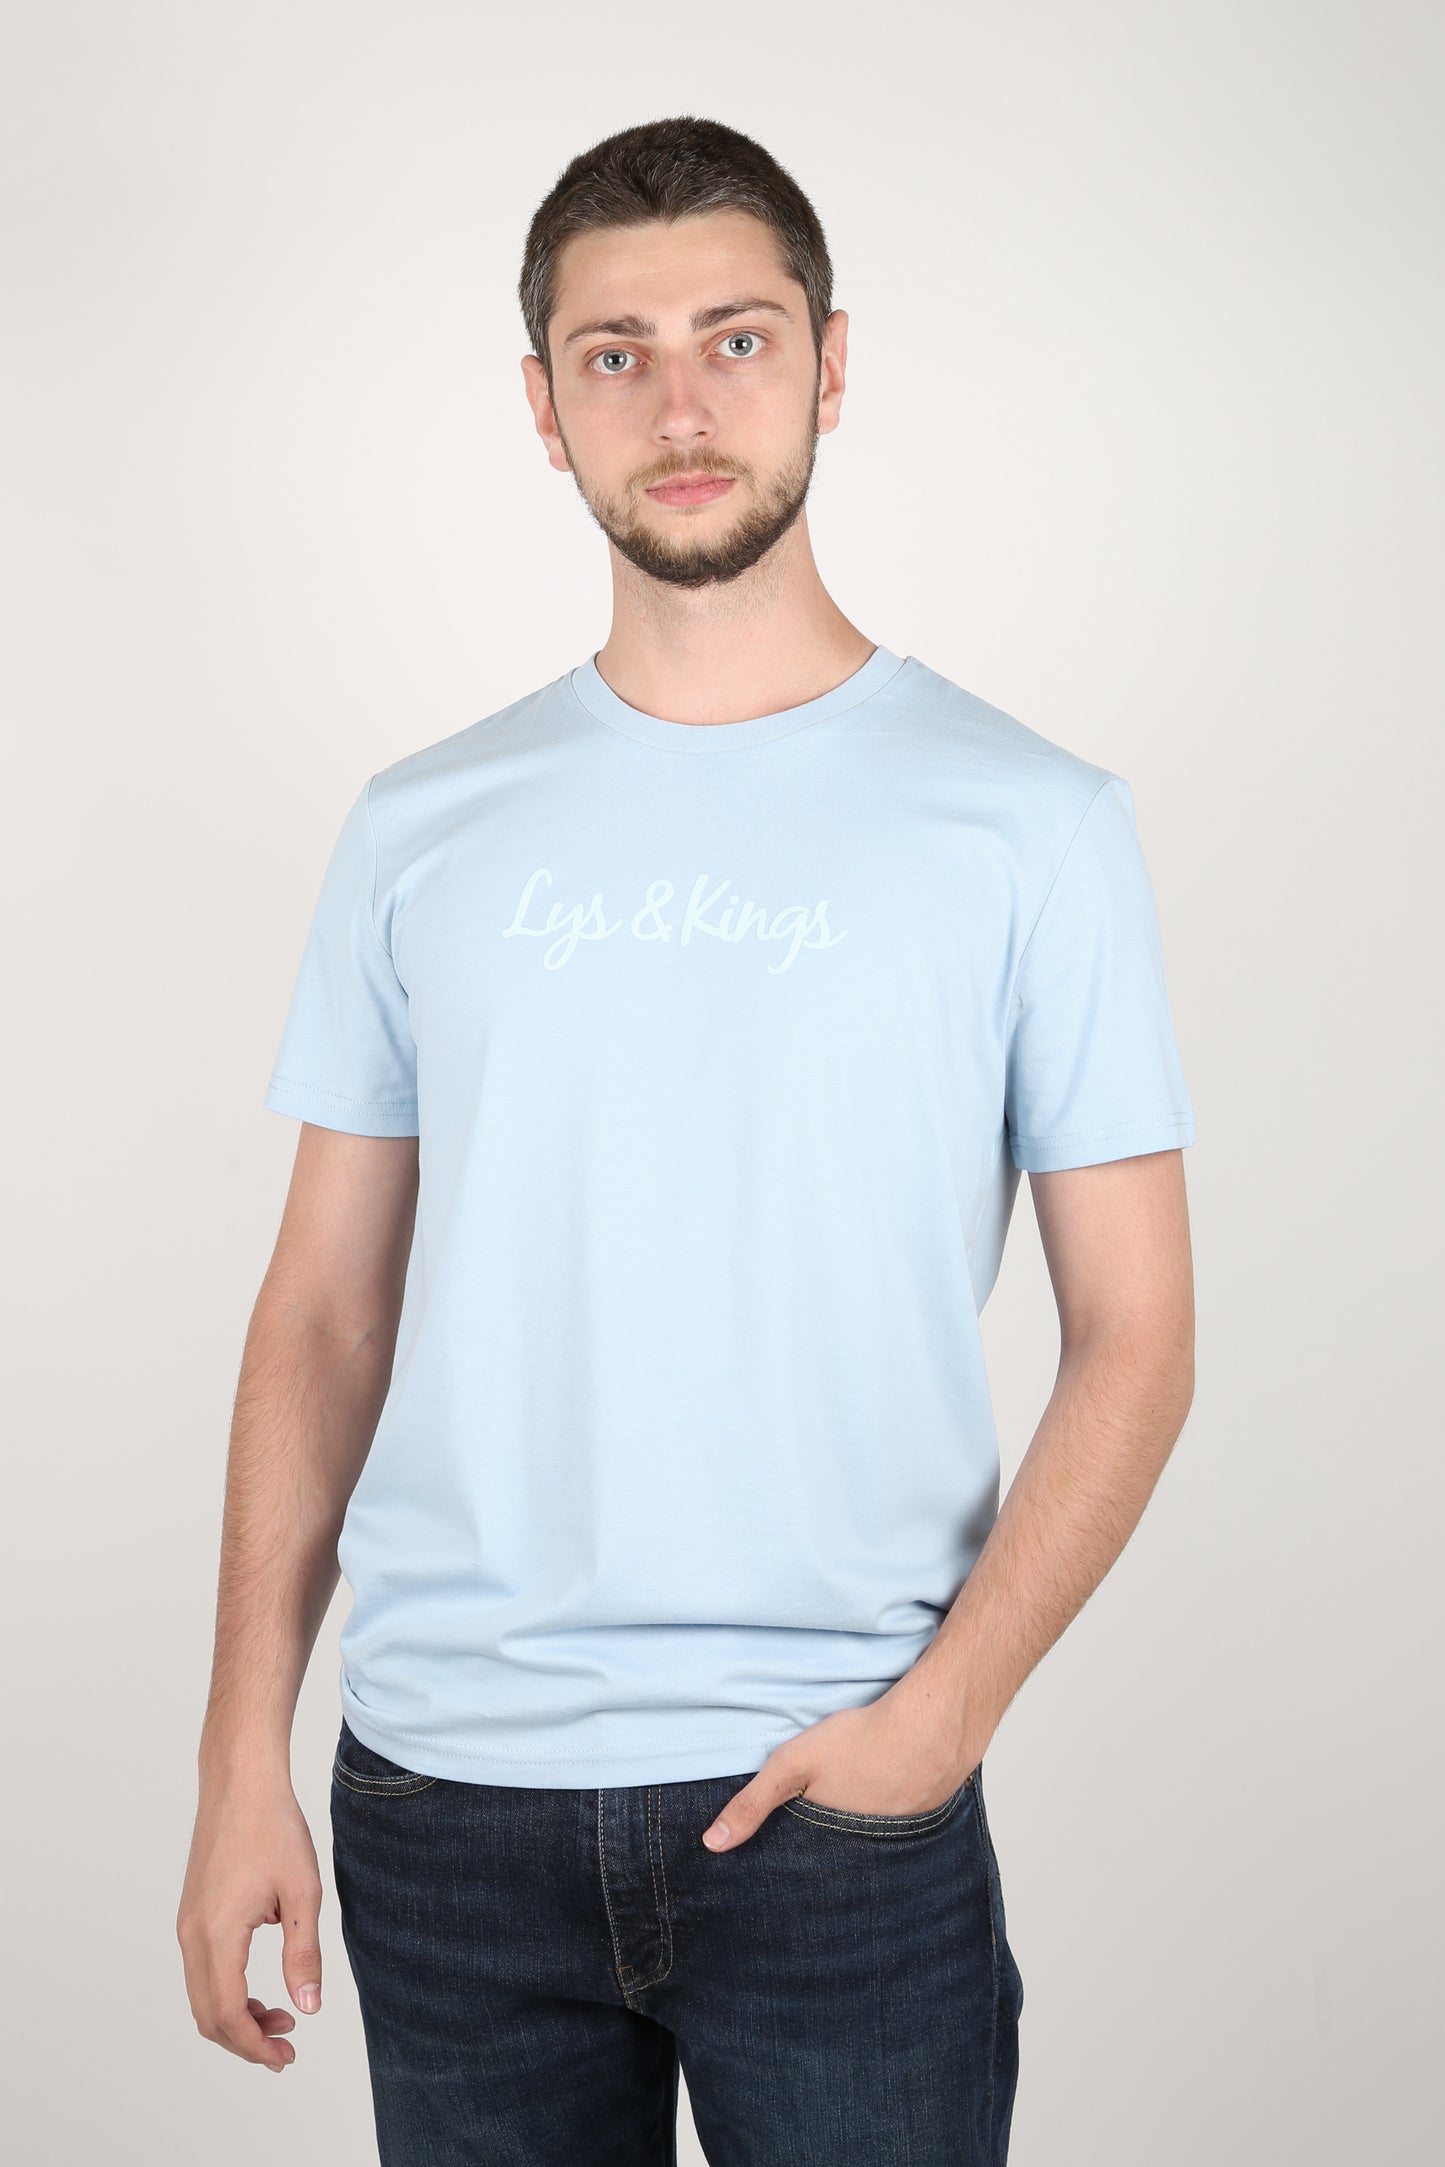 T-shirt  Lys & Kings